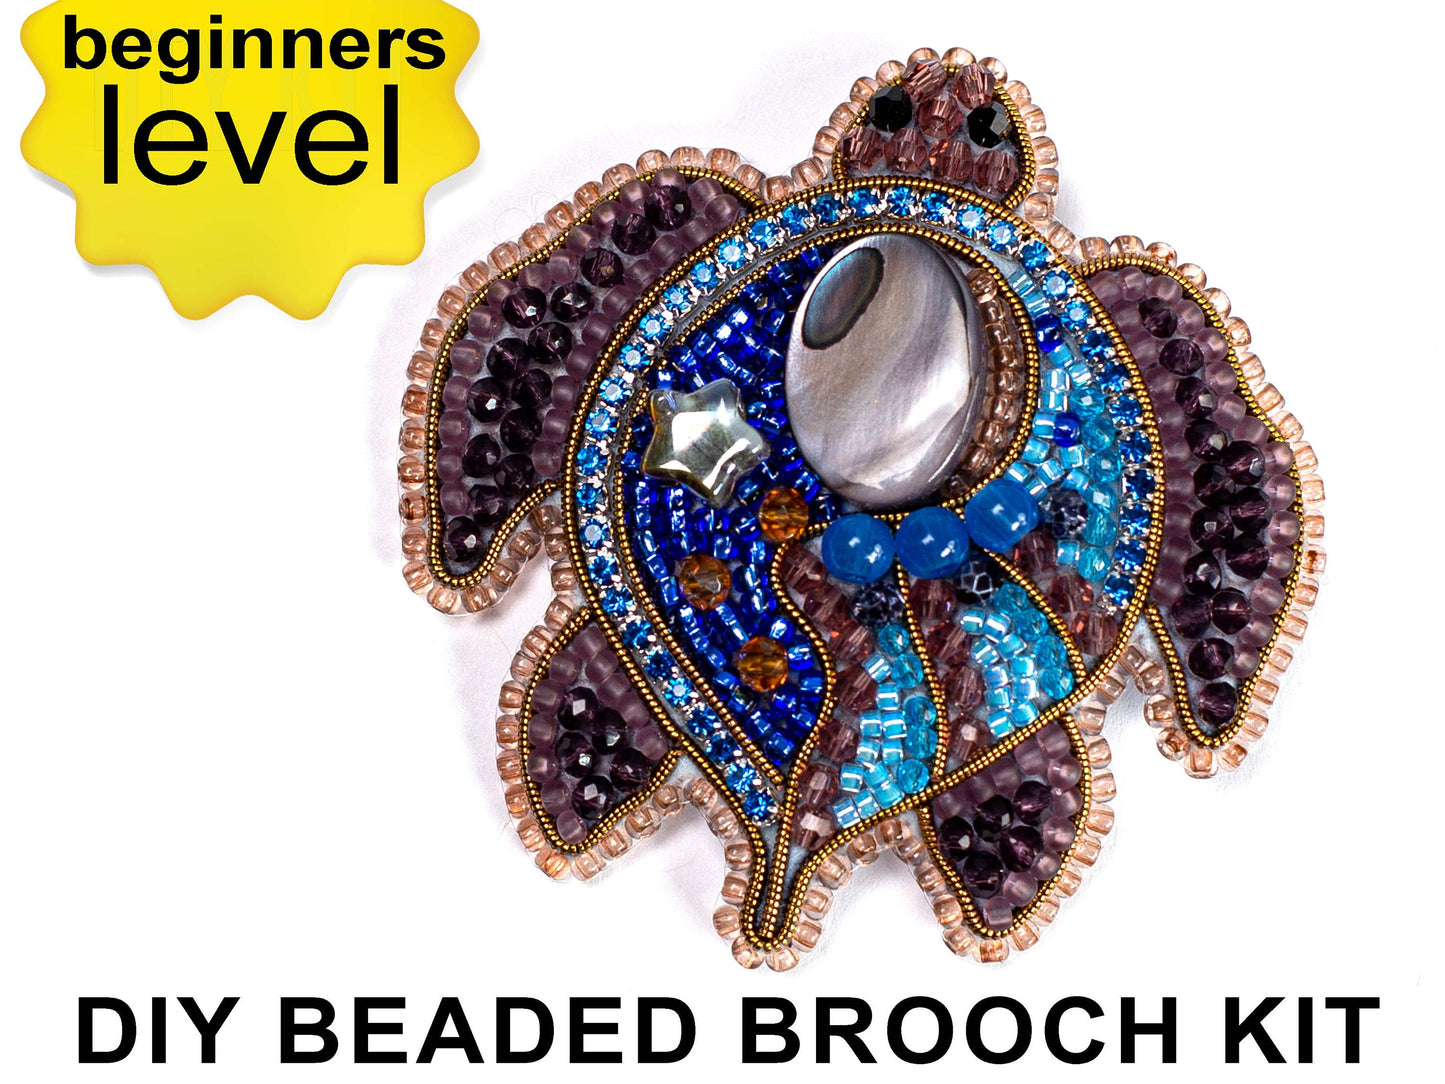 Turtle Bead Embroidery DIY Kit. Beaded Brooch. Seed Bead Brooch kit. DIY Craft kit. Beadweaving Kit. Needlework beading